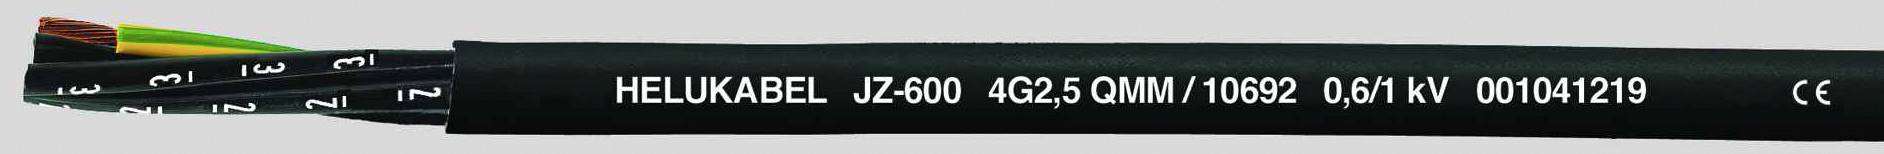 HELUKABEL JZ-600 Steuerleitung 7 G 2.50 mm² Schwarz 10696-500 500 m